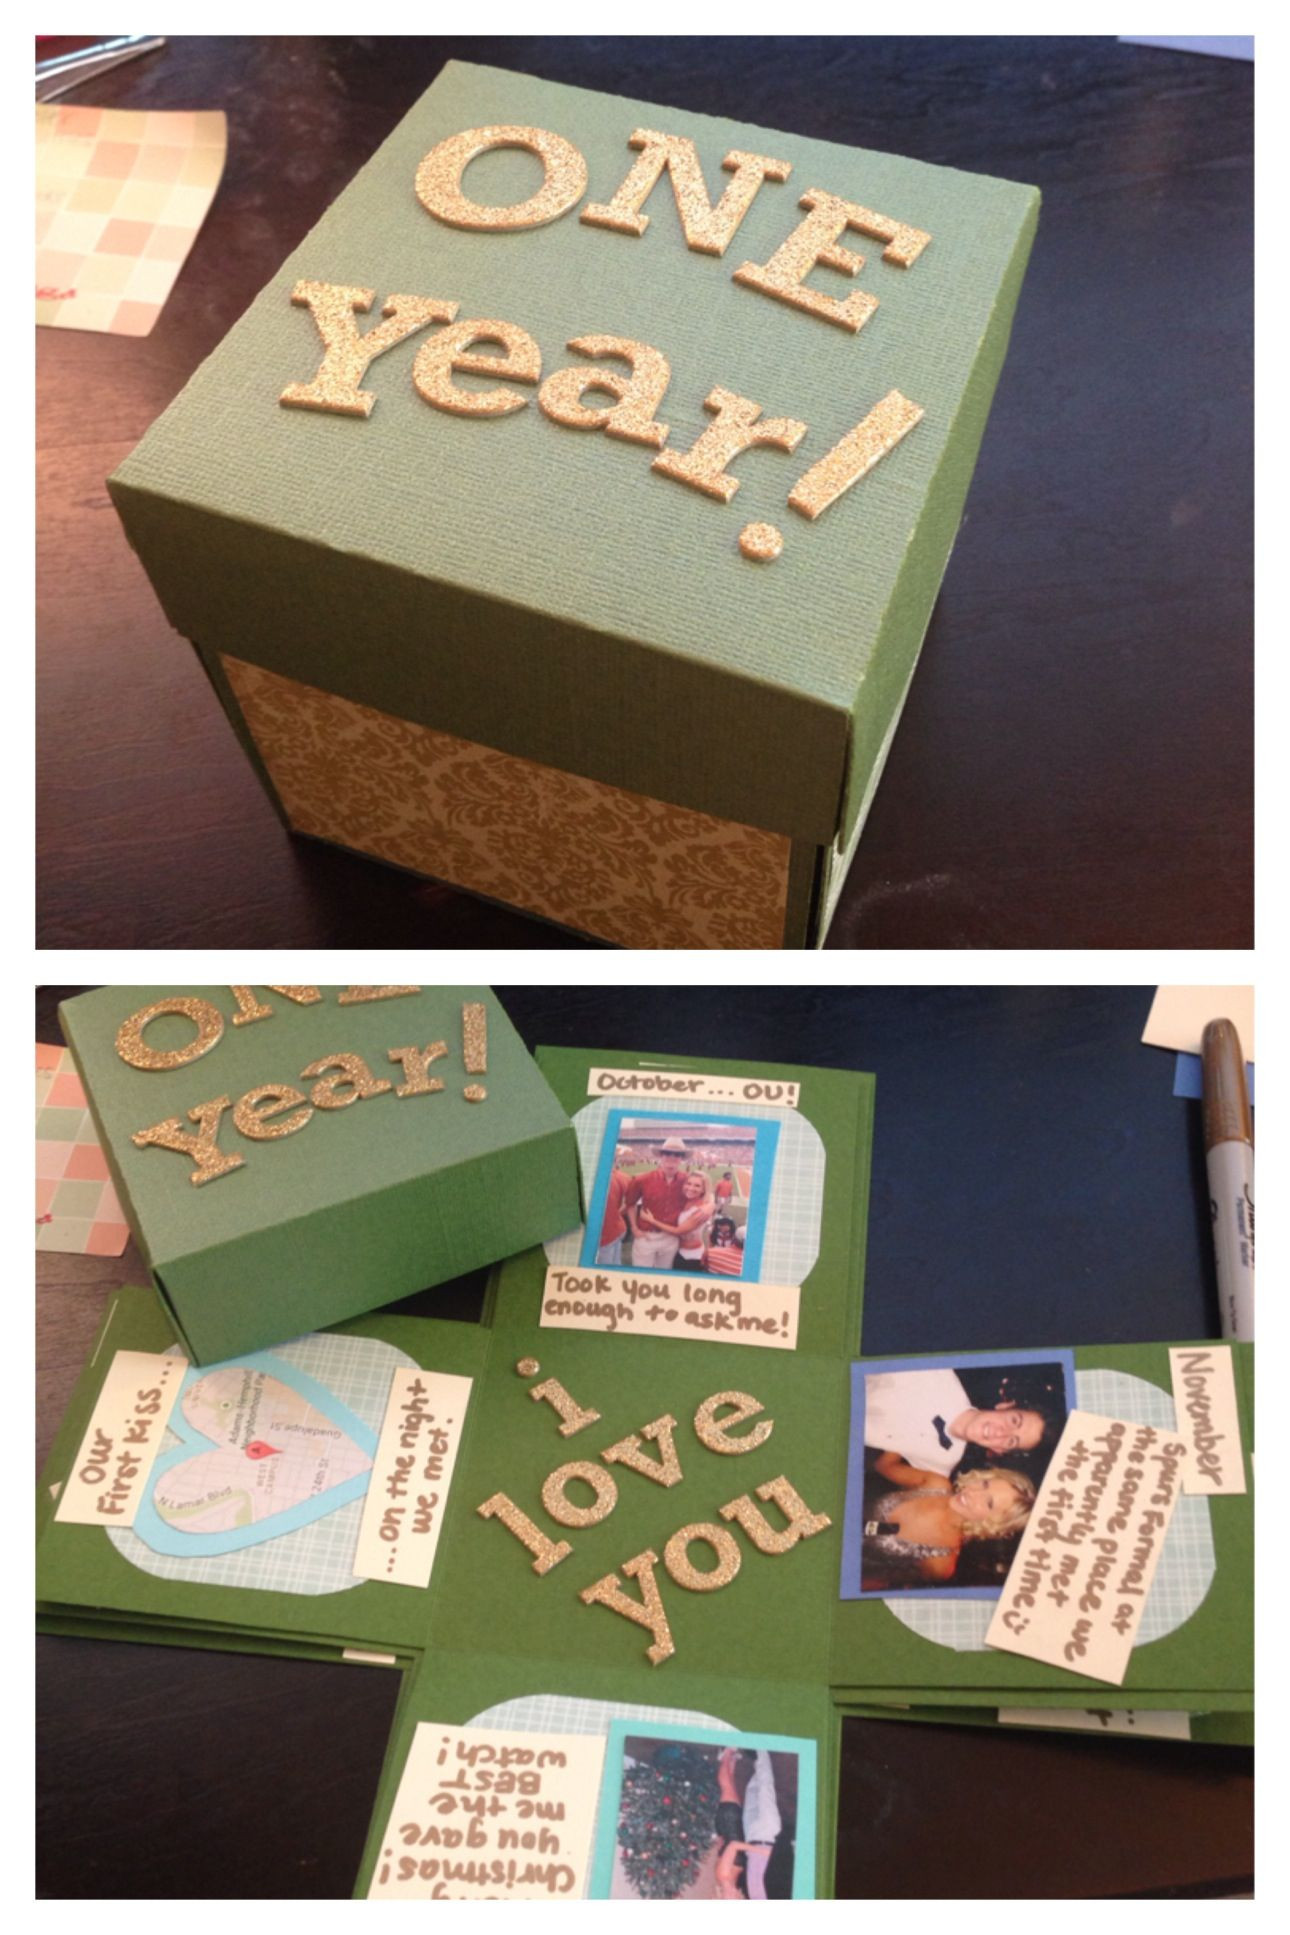 1 Year Anniversary Gift Ideas For Him
 Boyfriend Anniversary Gifts on Pinterest